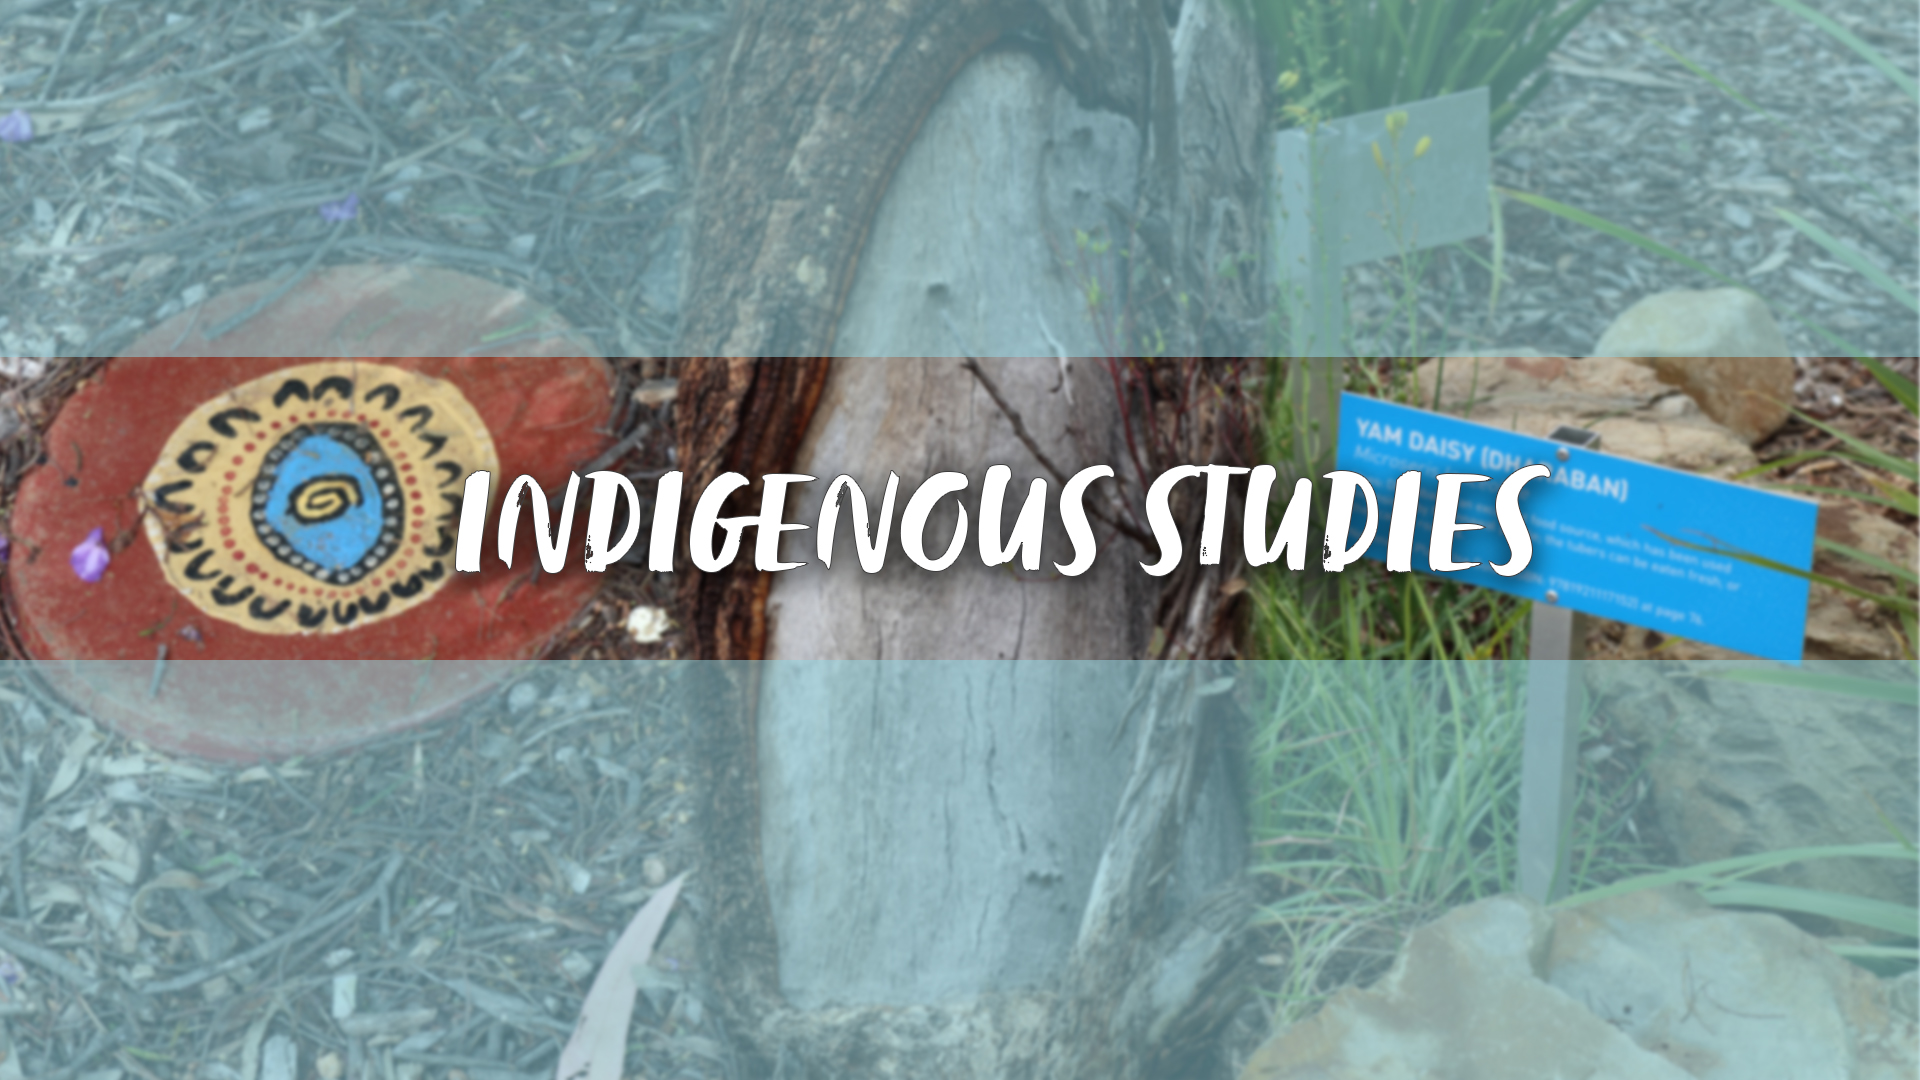 Indigenous Studies